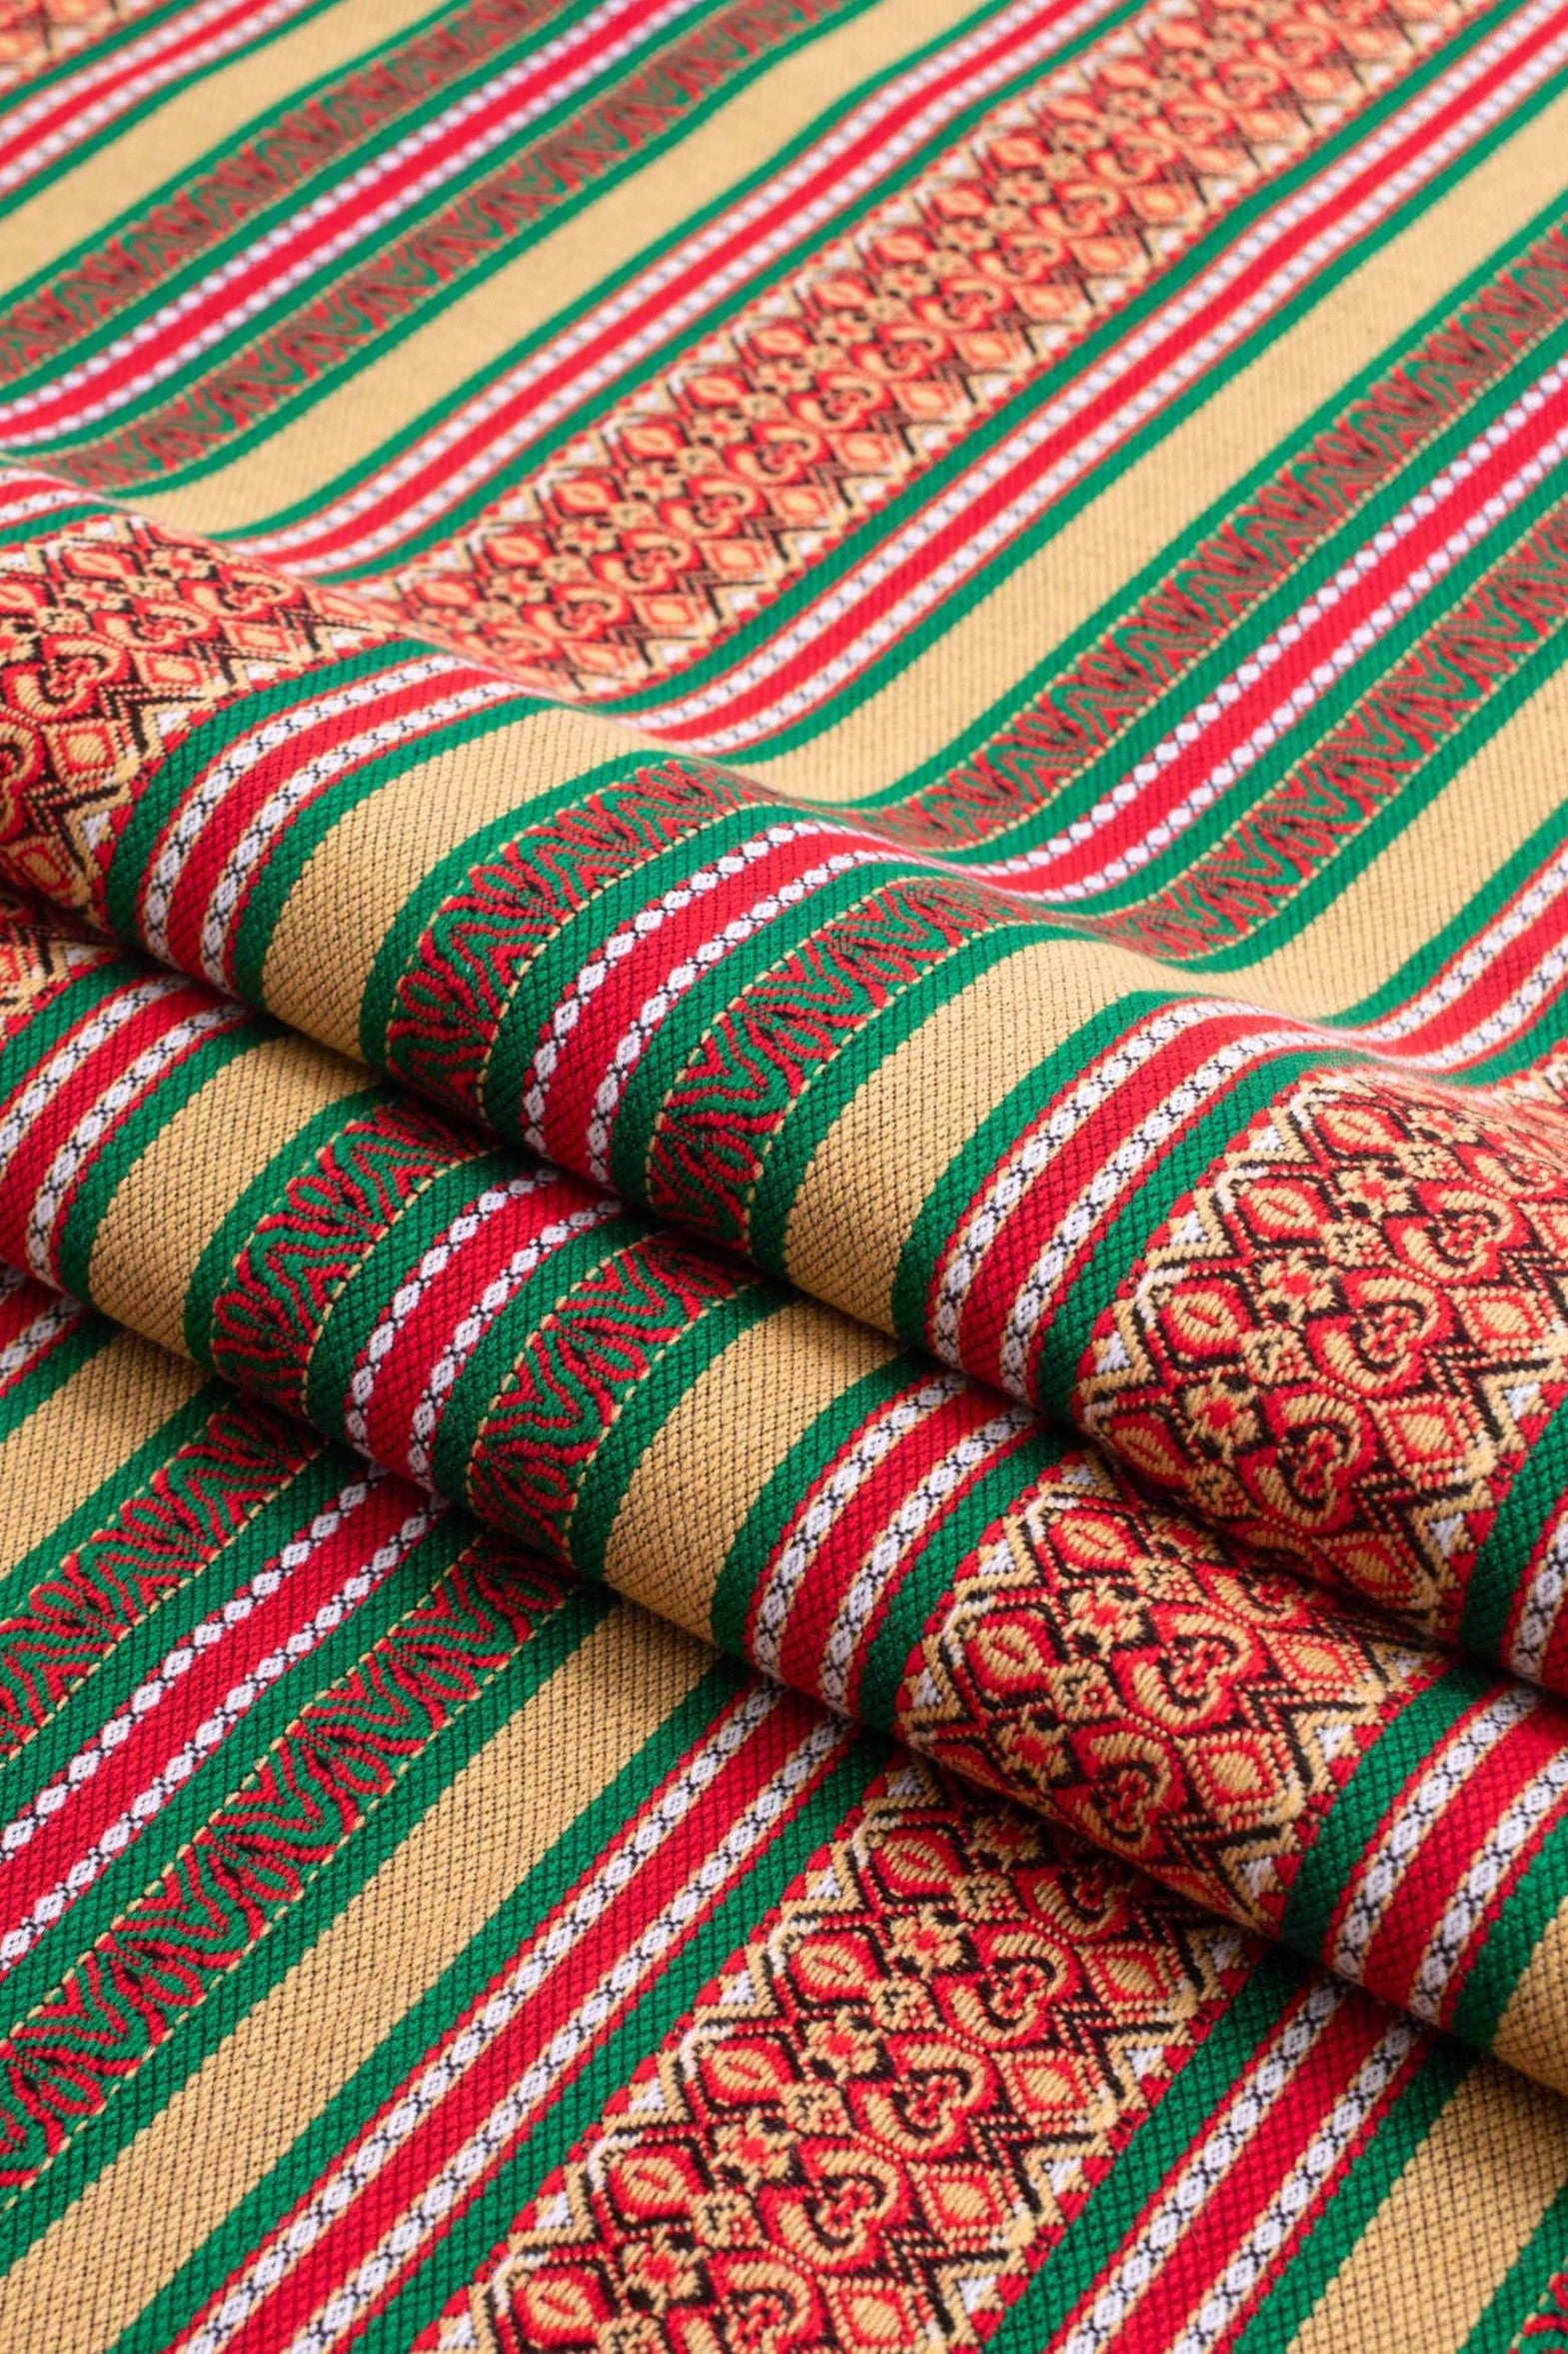 Ukrainian woven fabric "Heritage" by yard